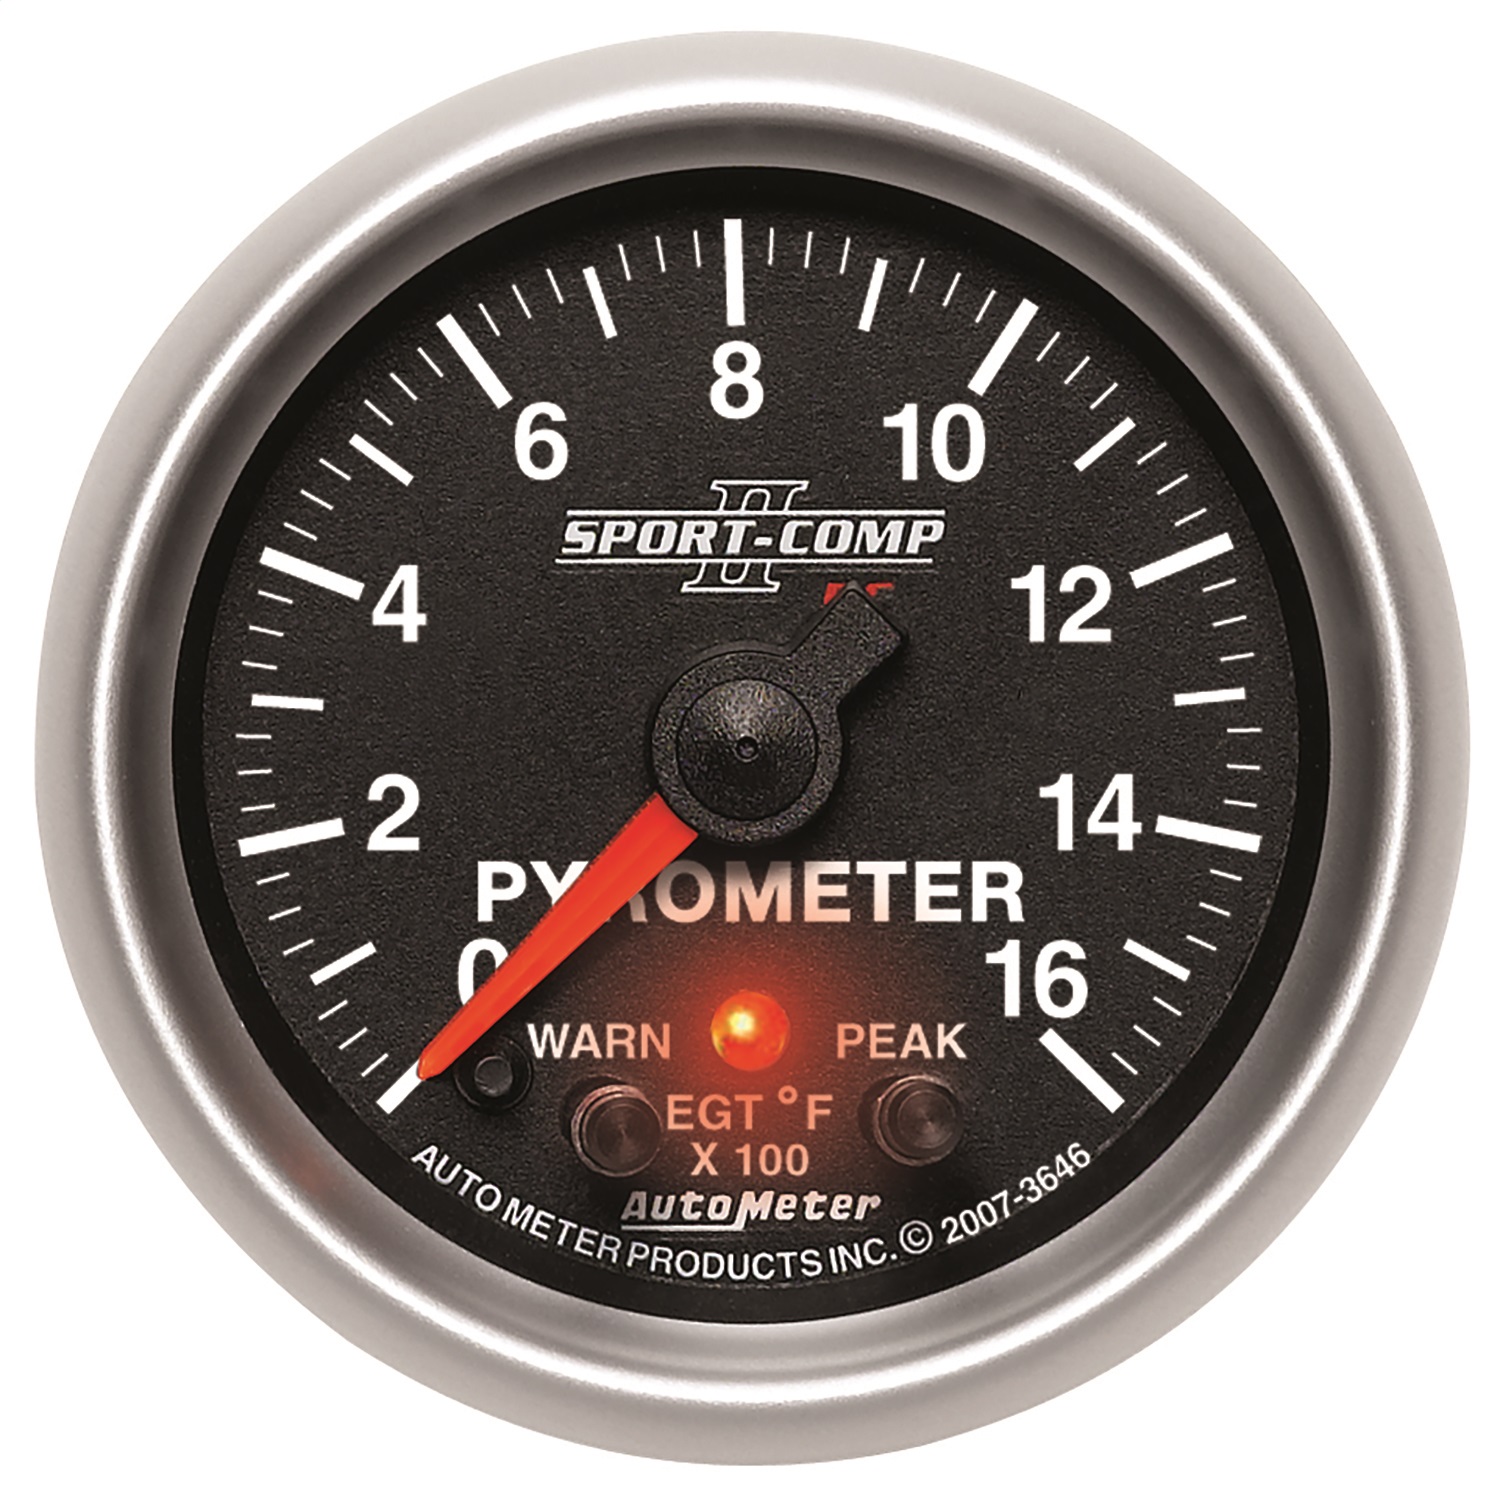 Auto Meter Auto Meter 3646 Sport-Comp PC; Pyrometer Gauge